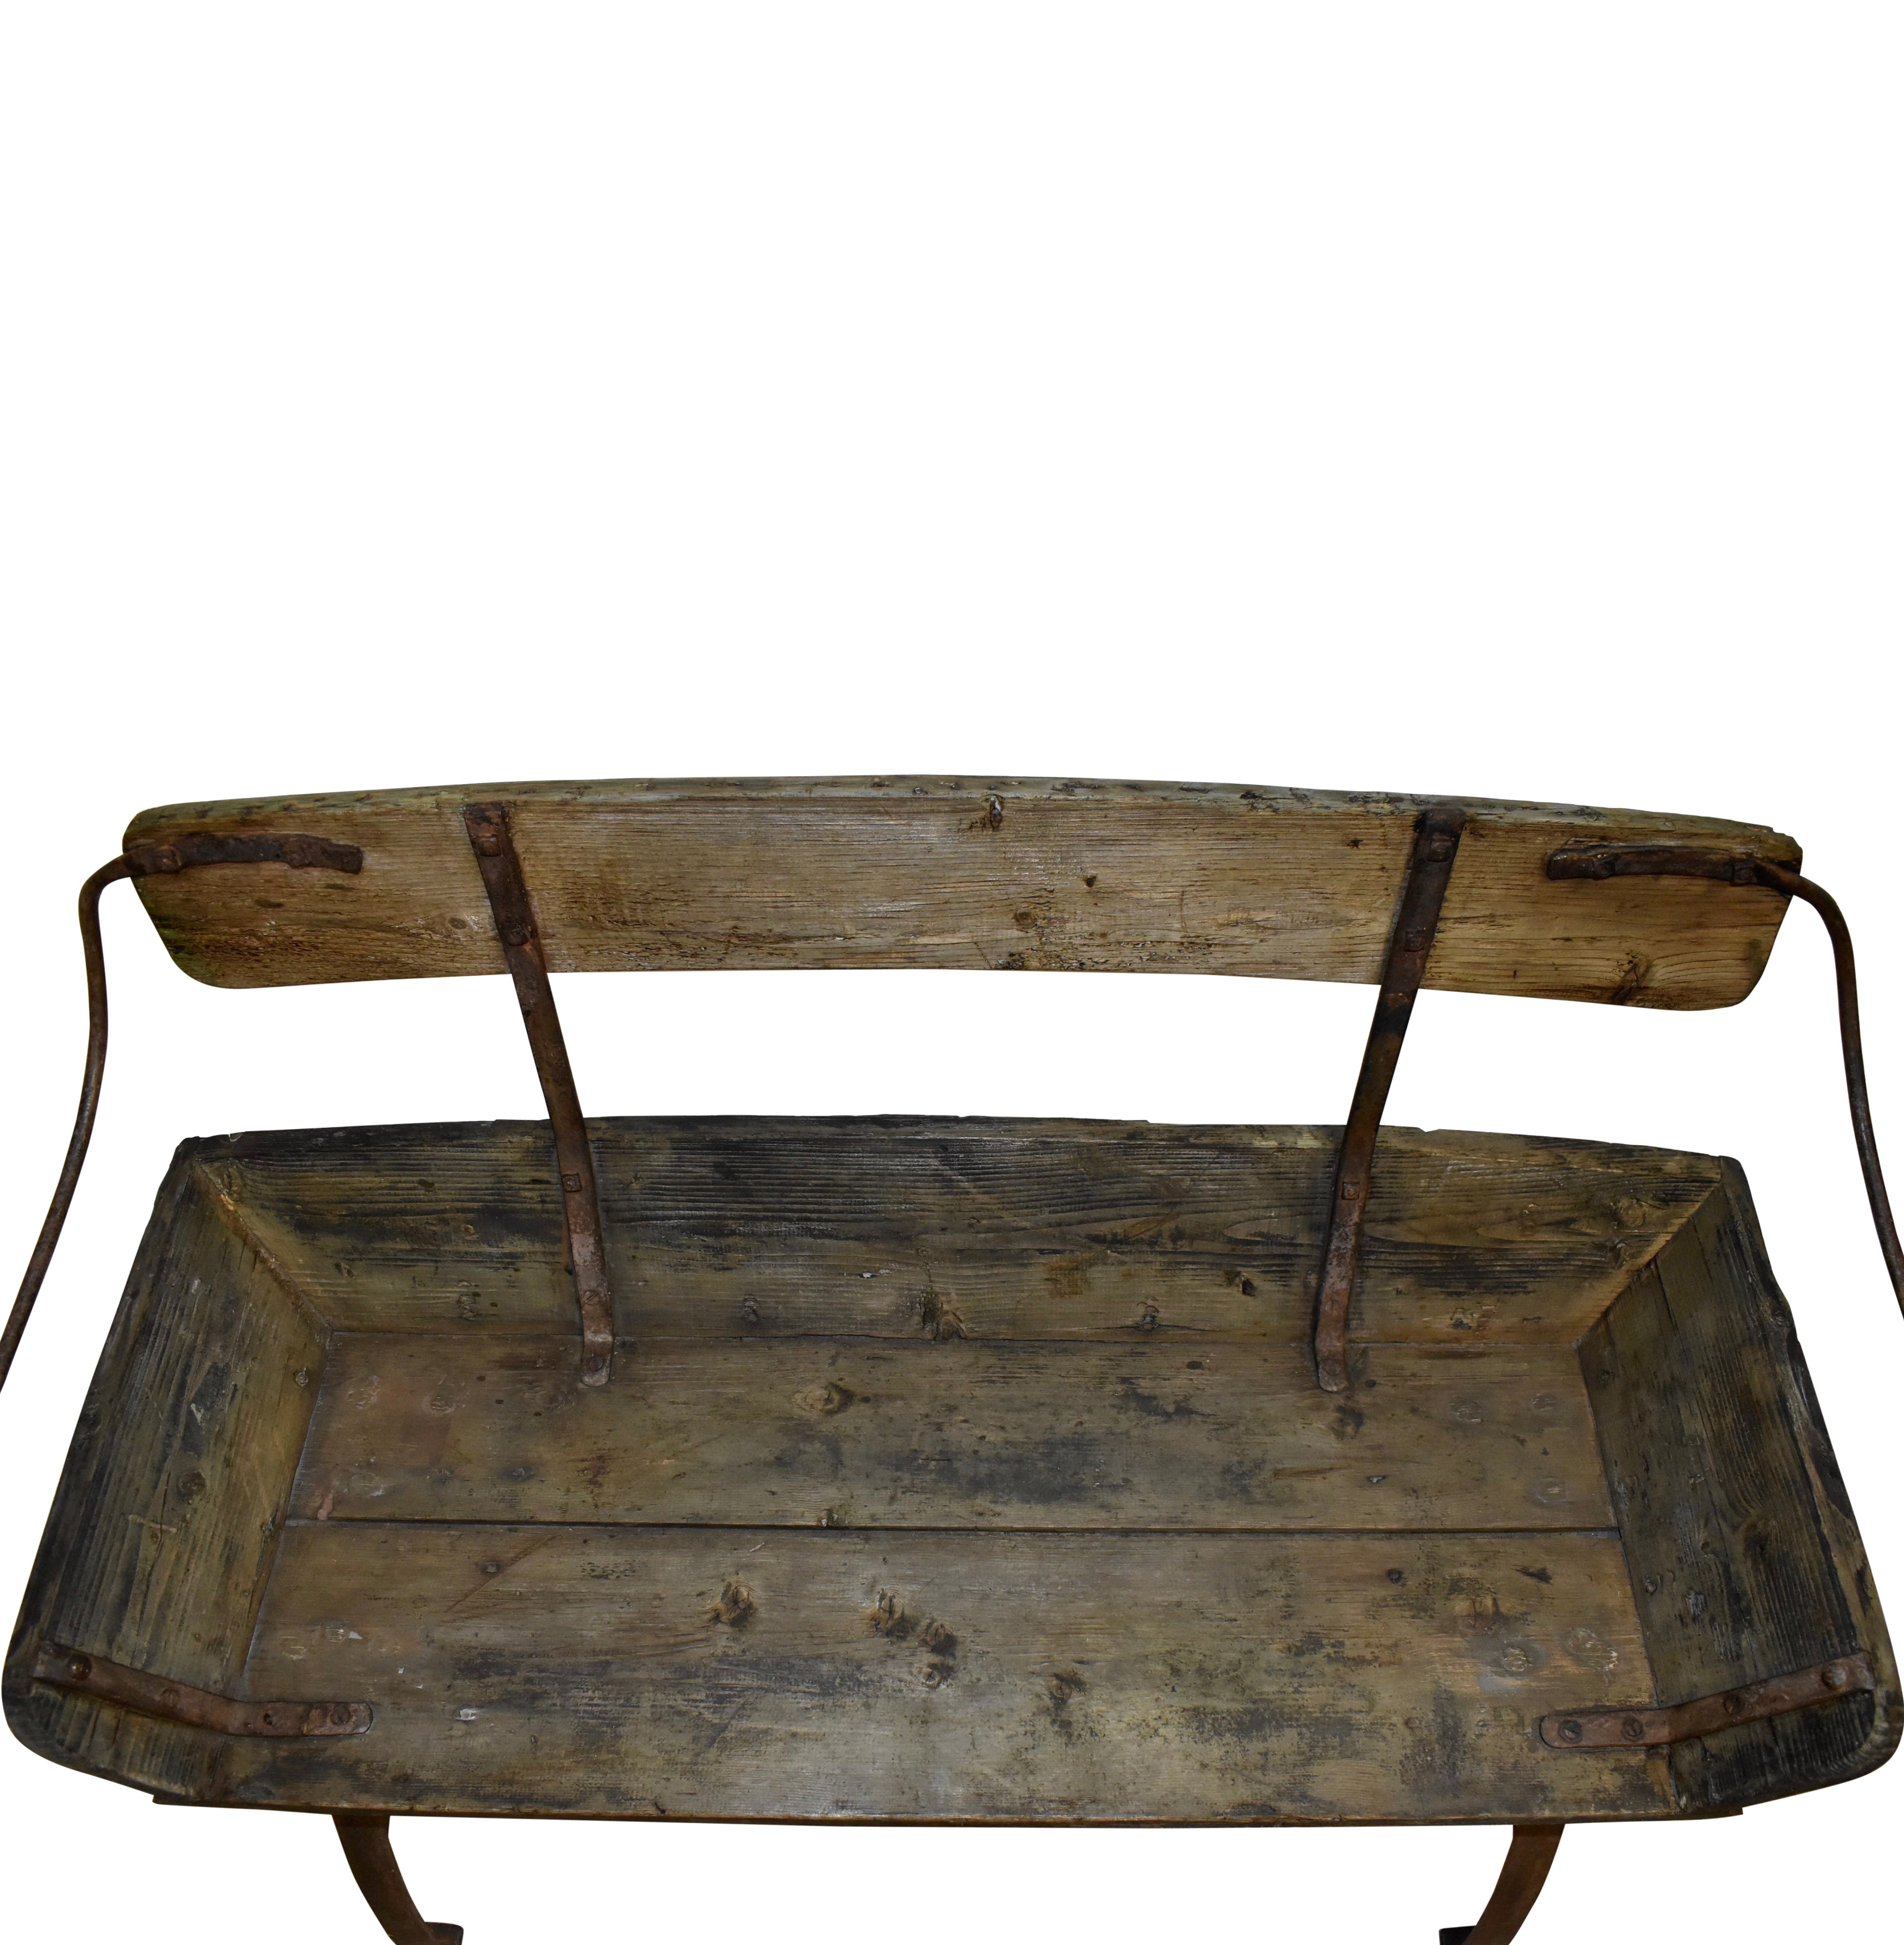 Buckboard Wagon Bench Seat with Steel Legs